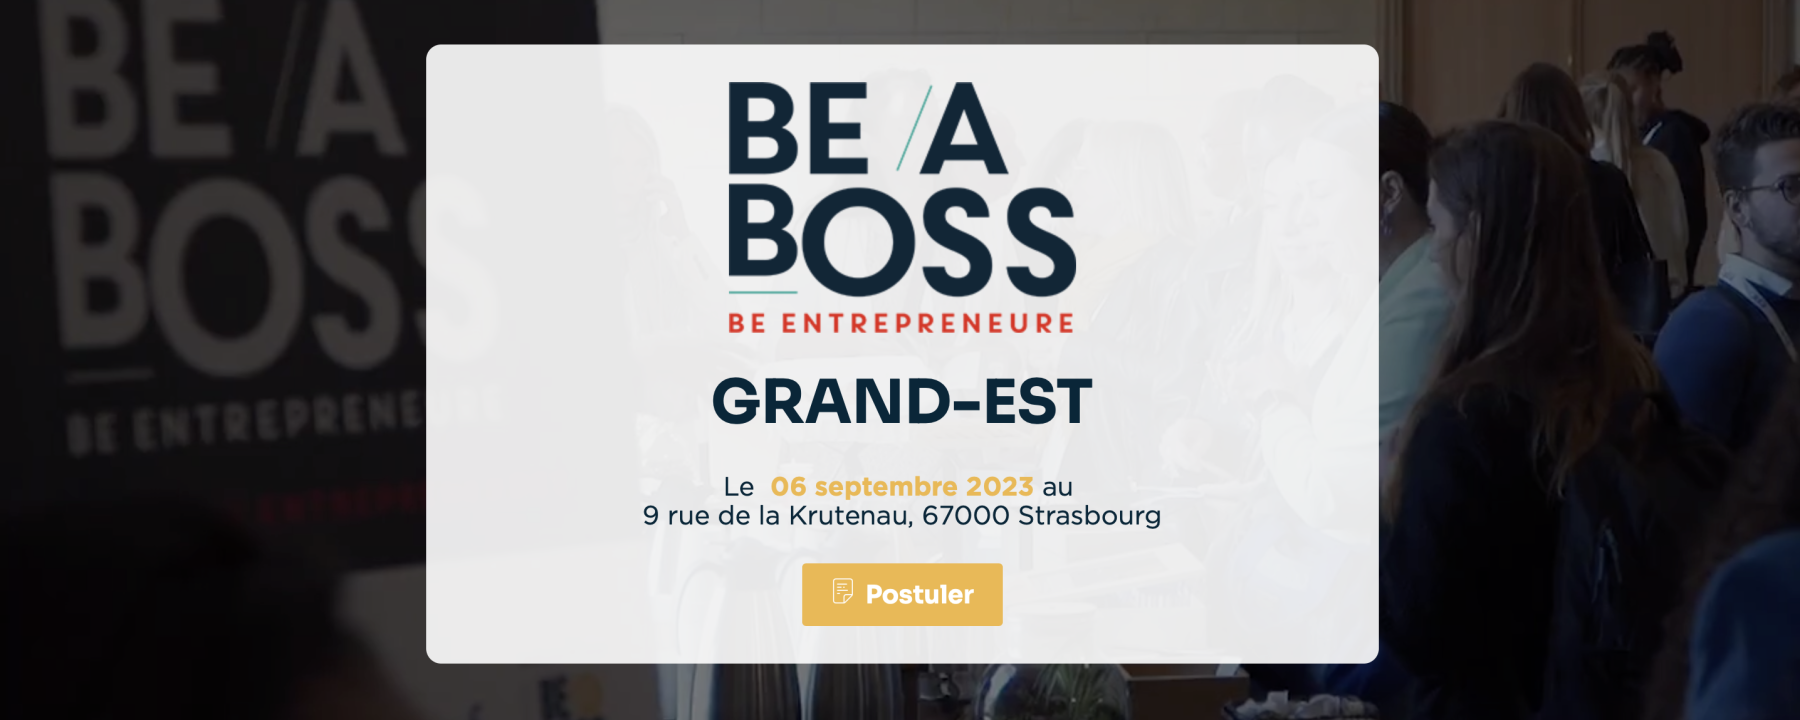 Be a boss 2023 - Grand Est